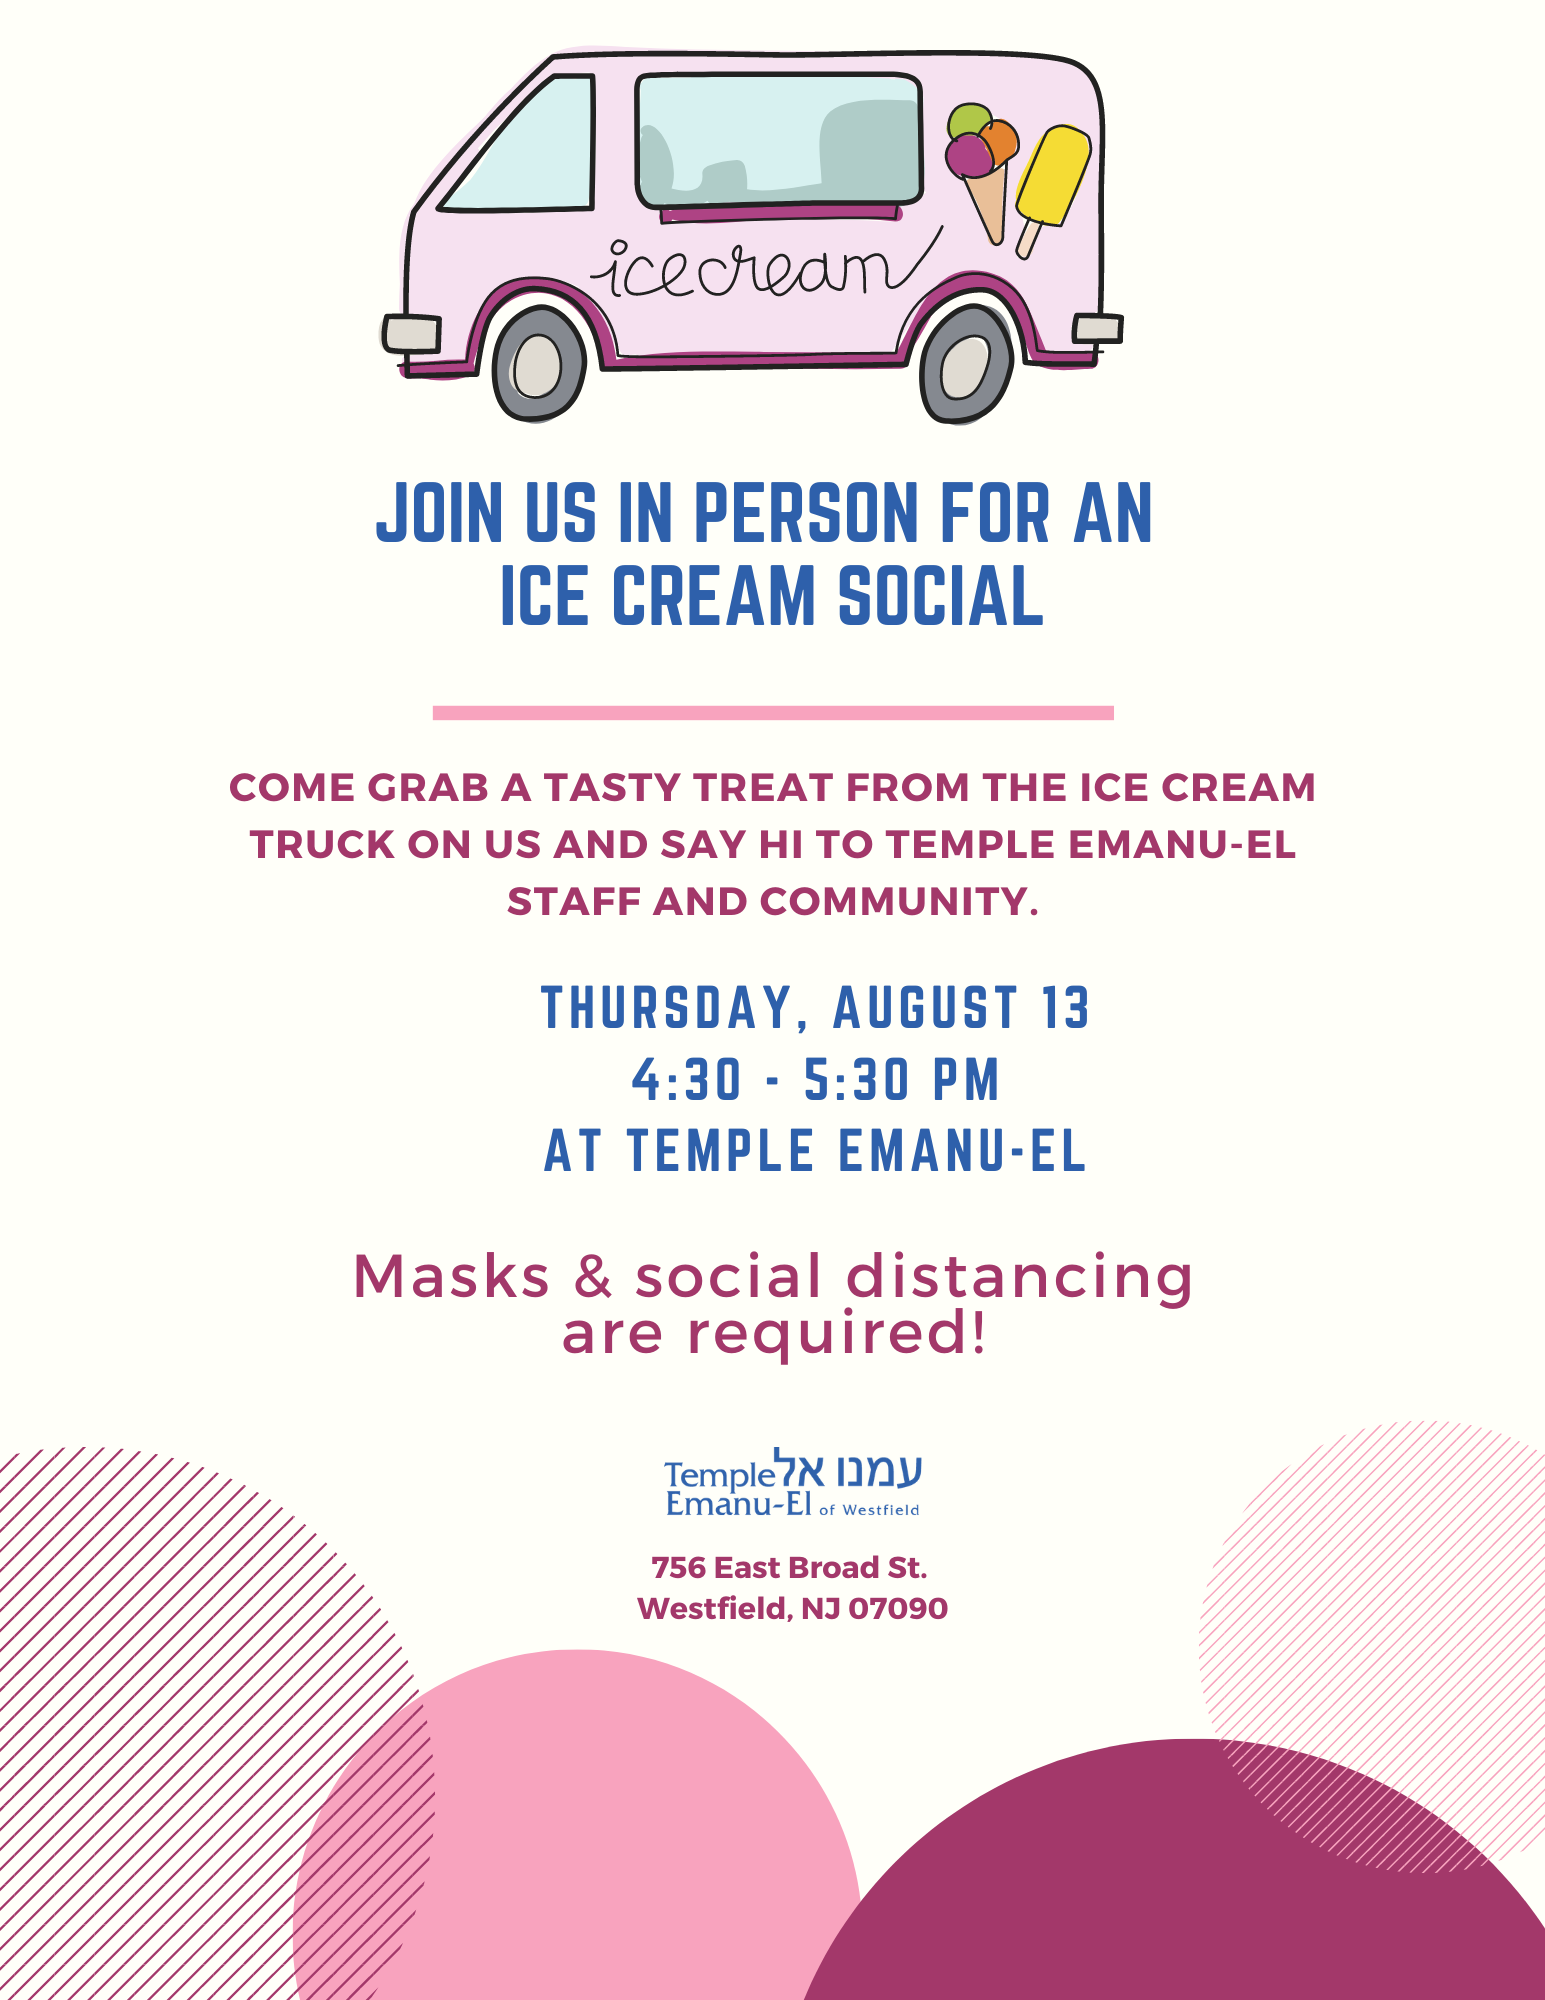 Ice cream social - Aug 13